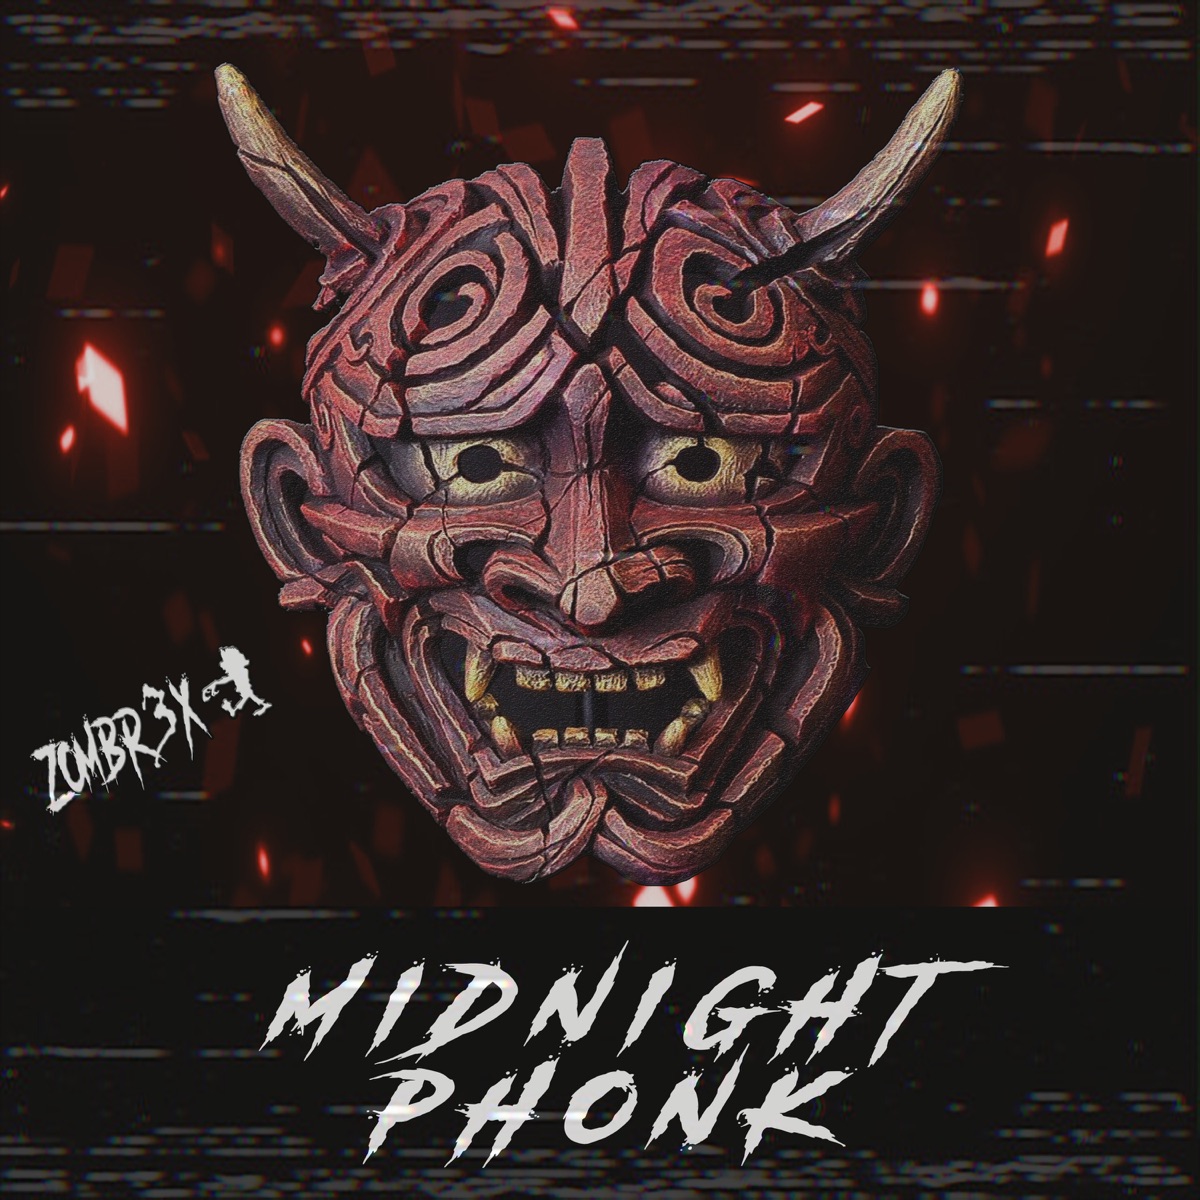 Mrbeast Meme Song Phonk (Remix) - Single - Album by Zombr3x, Phonk